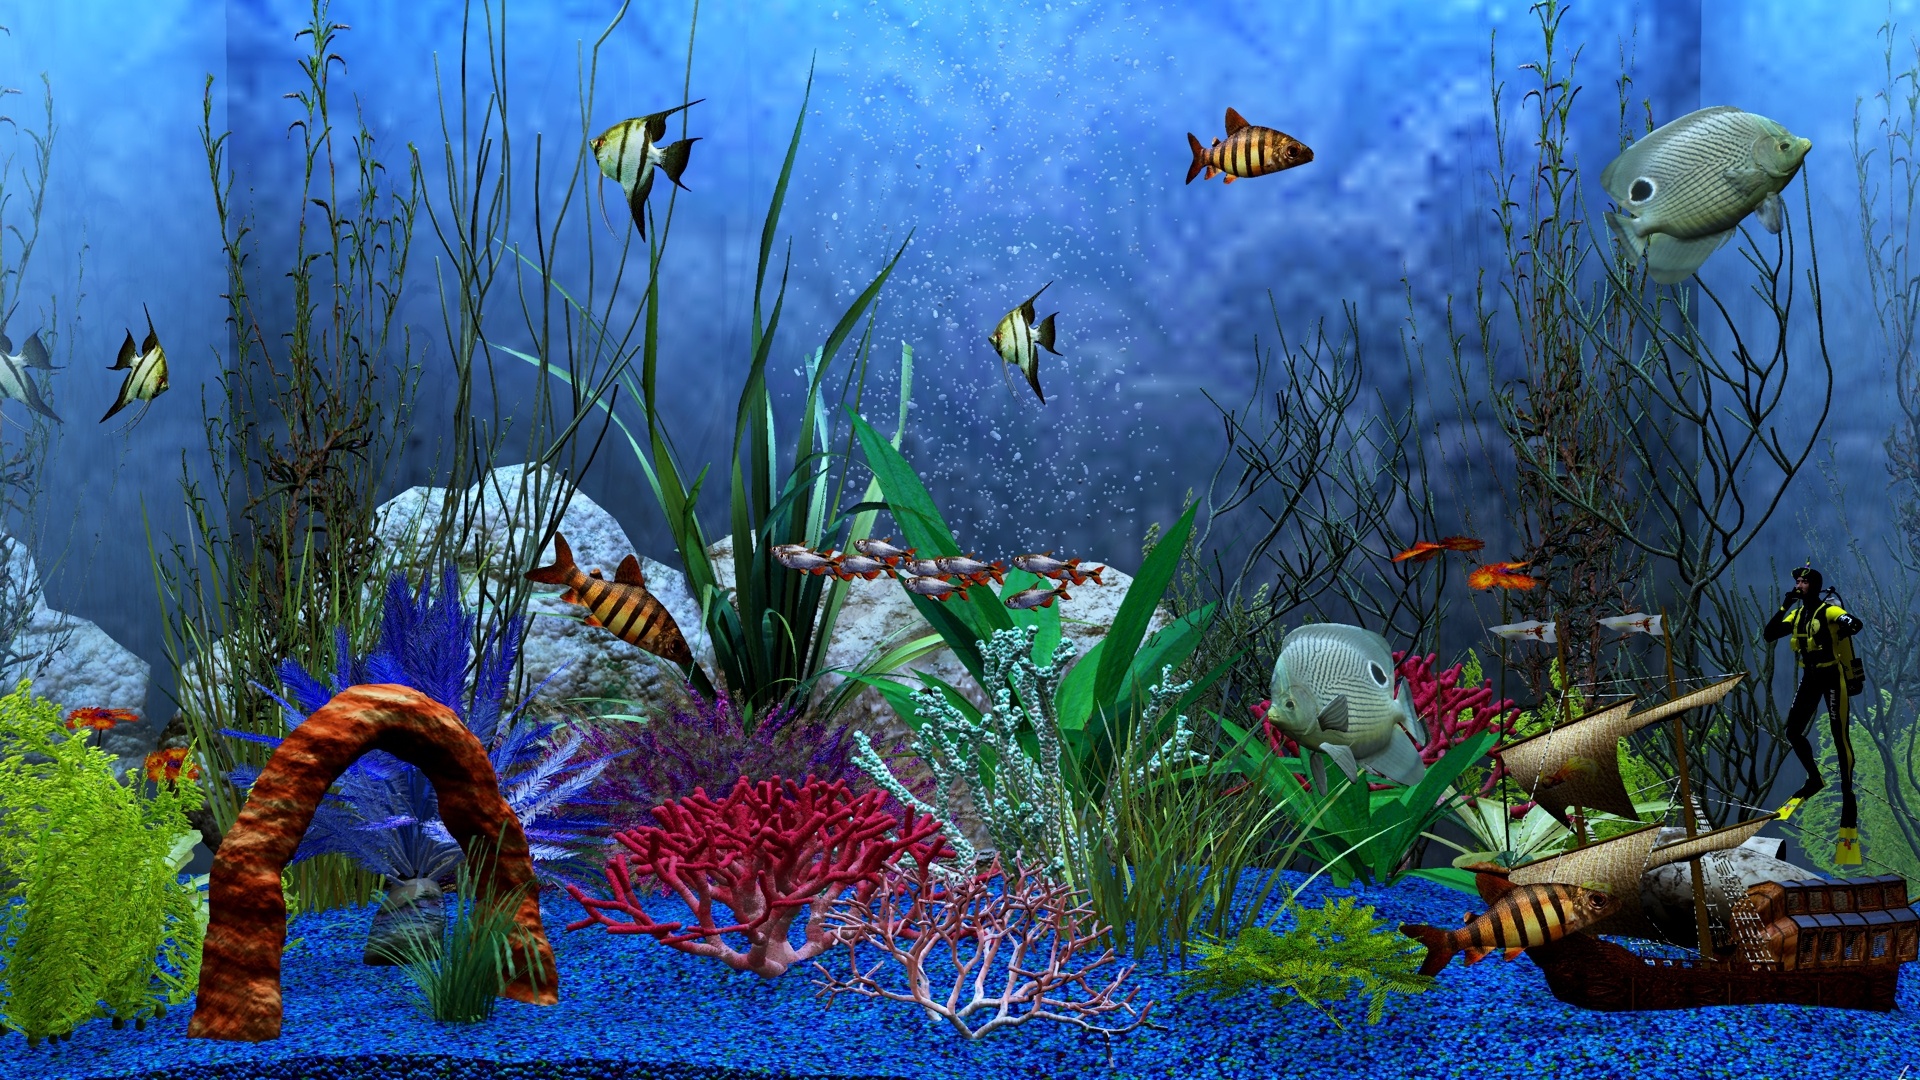 Aquarium Hd Wallpaper Photo - Ndemok.com